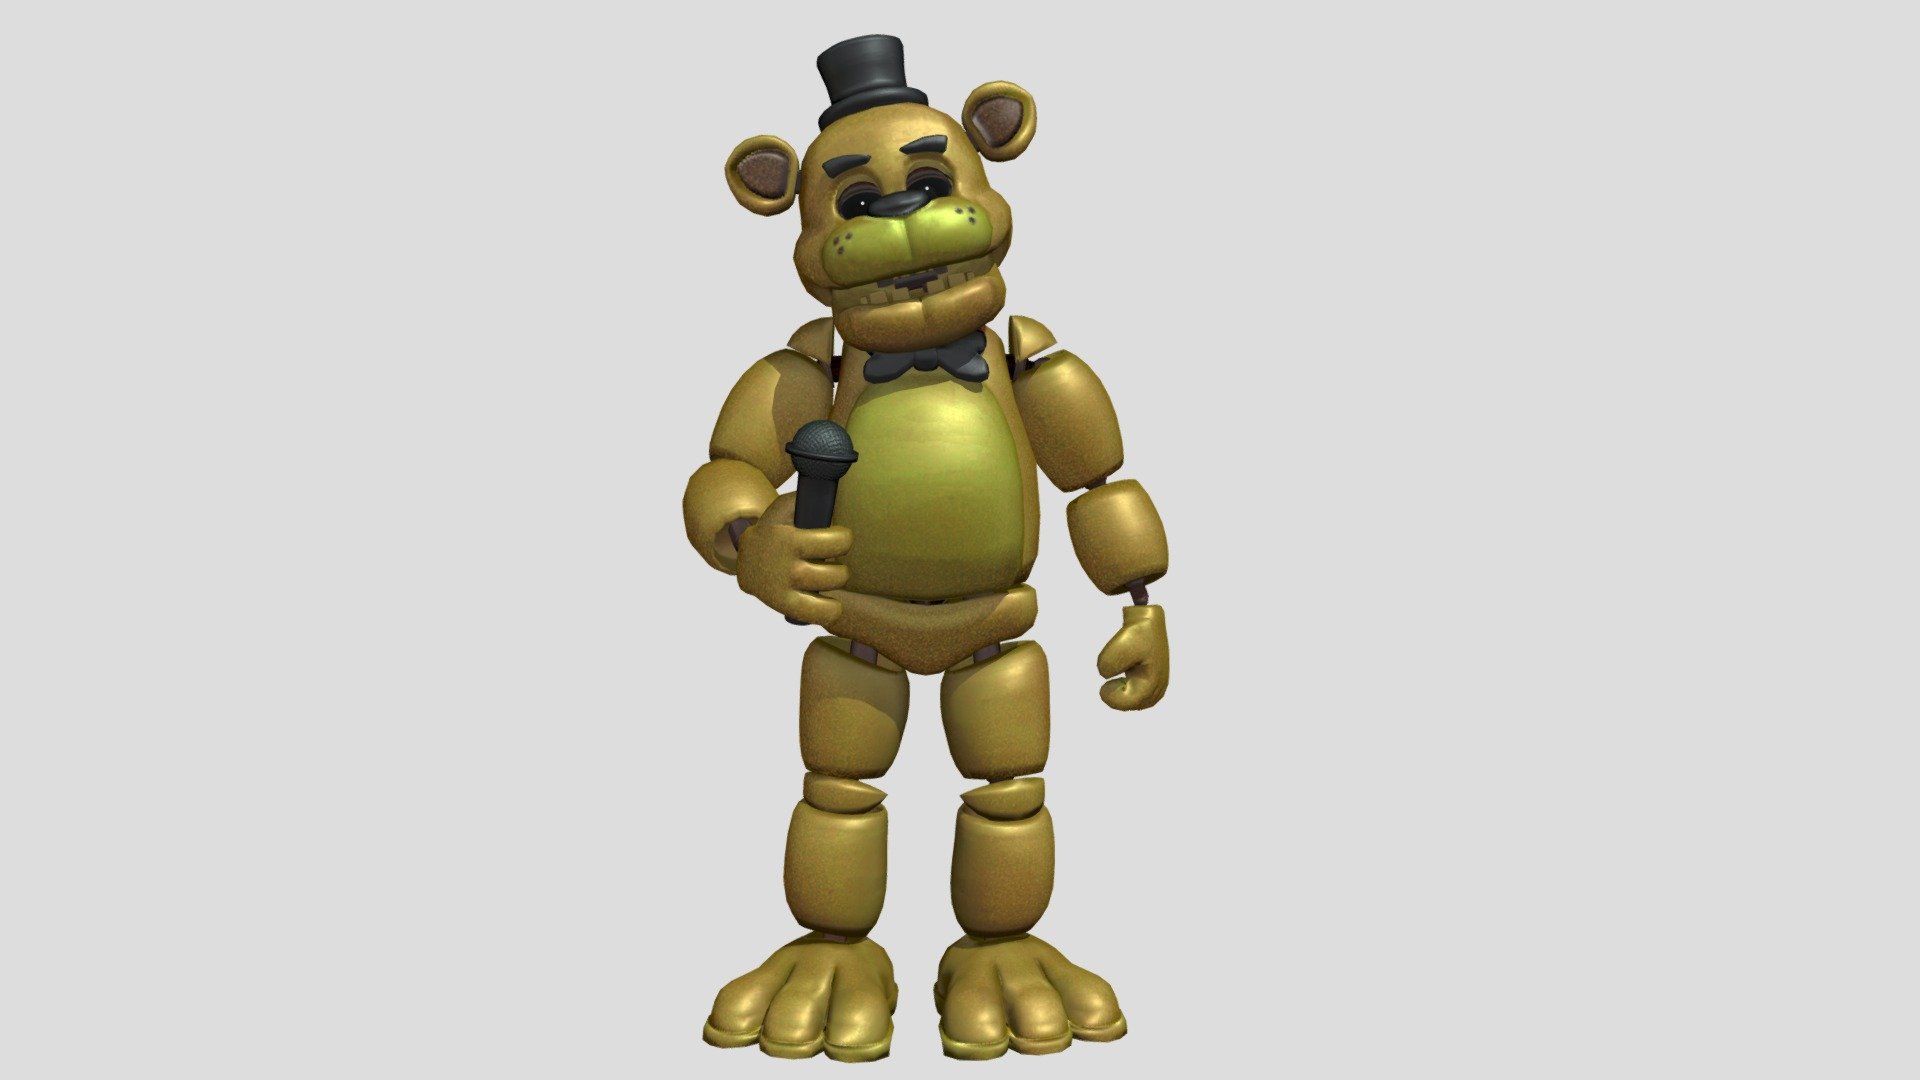 Golden Freddy 3D Model